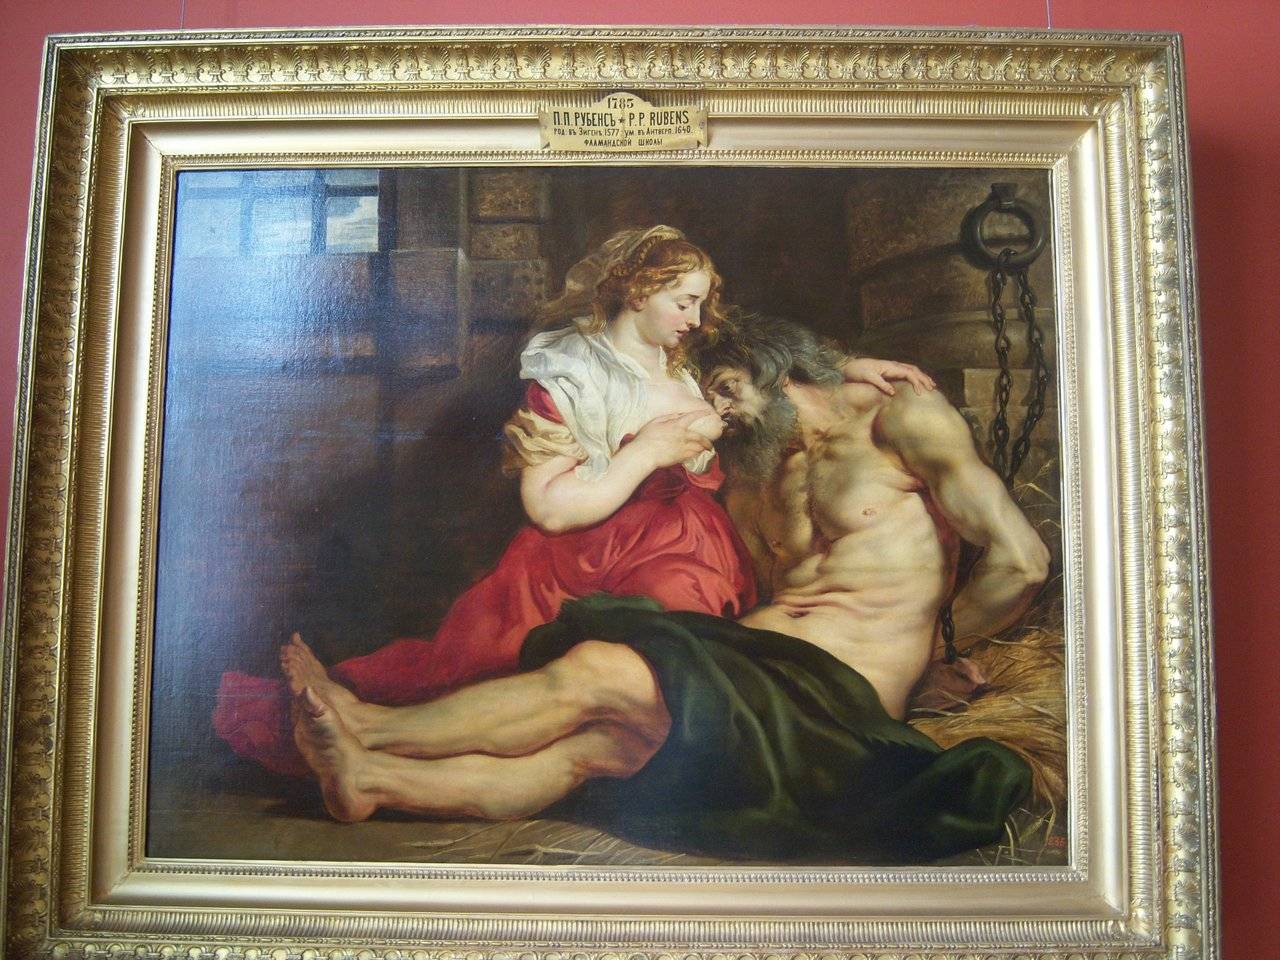 Rubens painting "Caritas Romana"